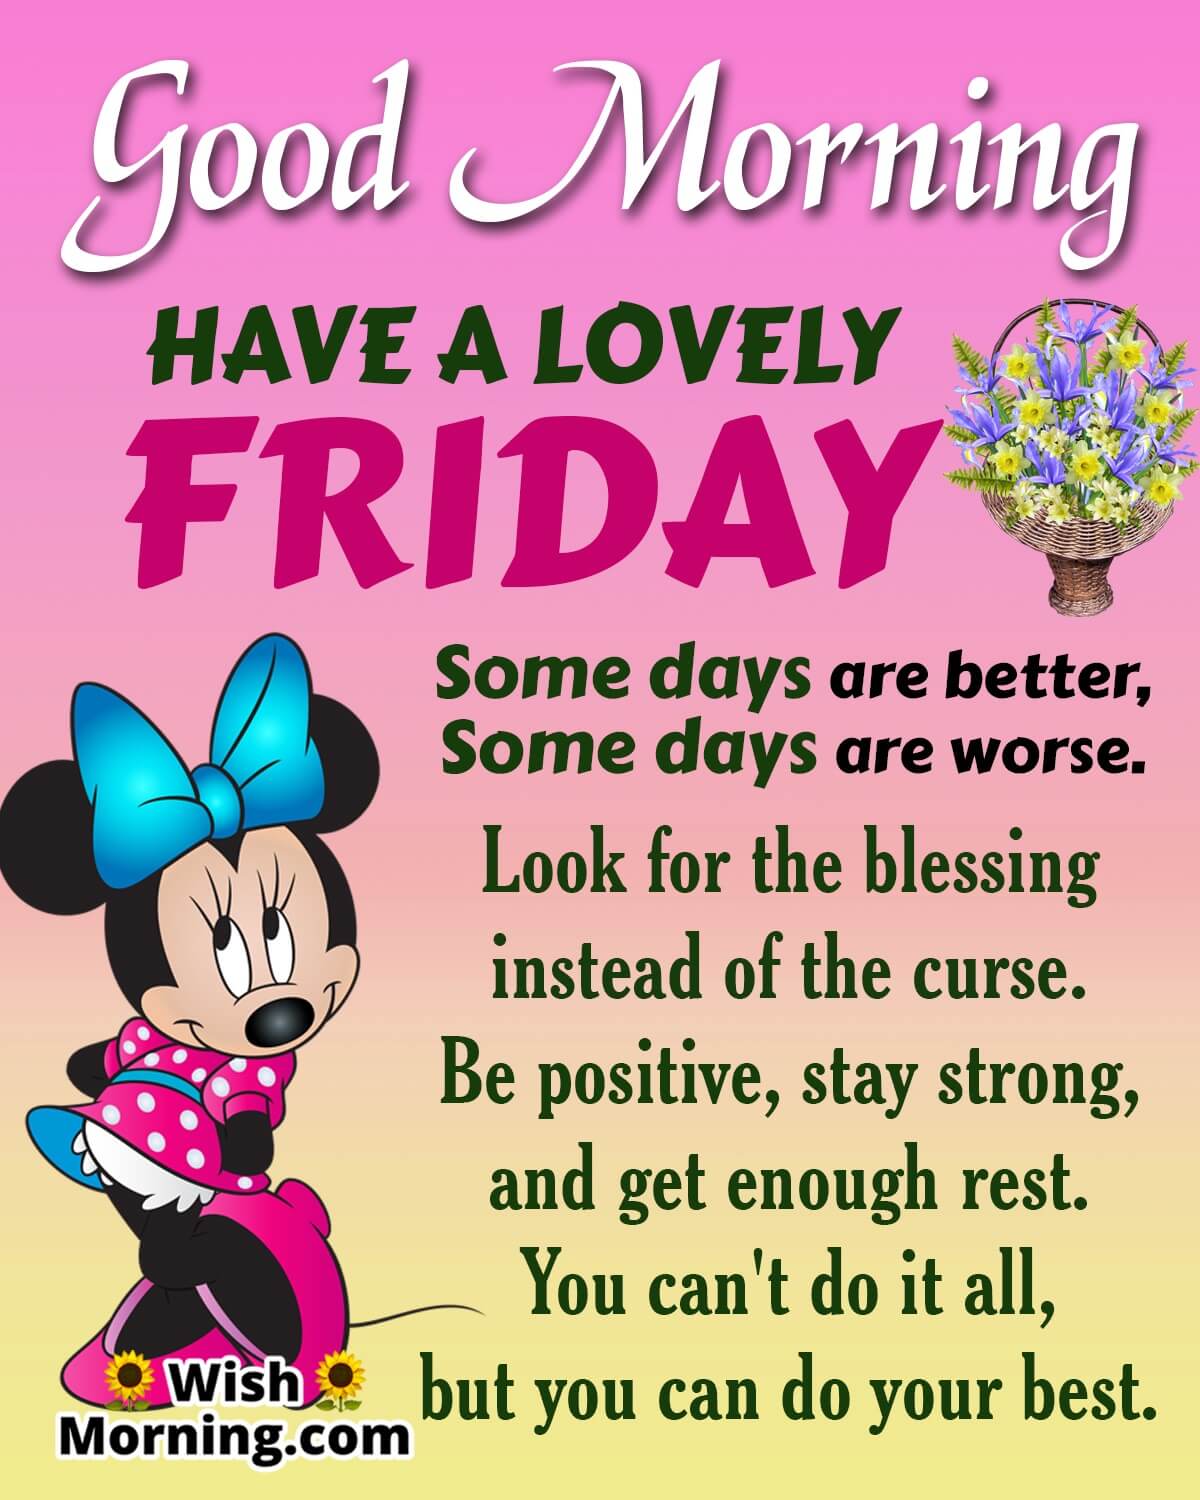 Good Morning Lovely Friday Message